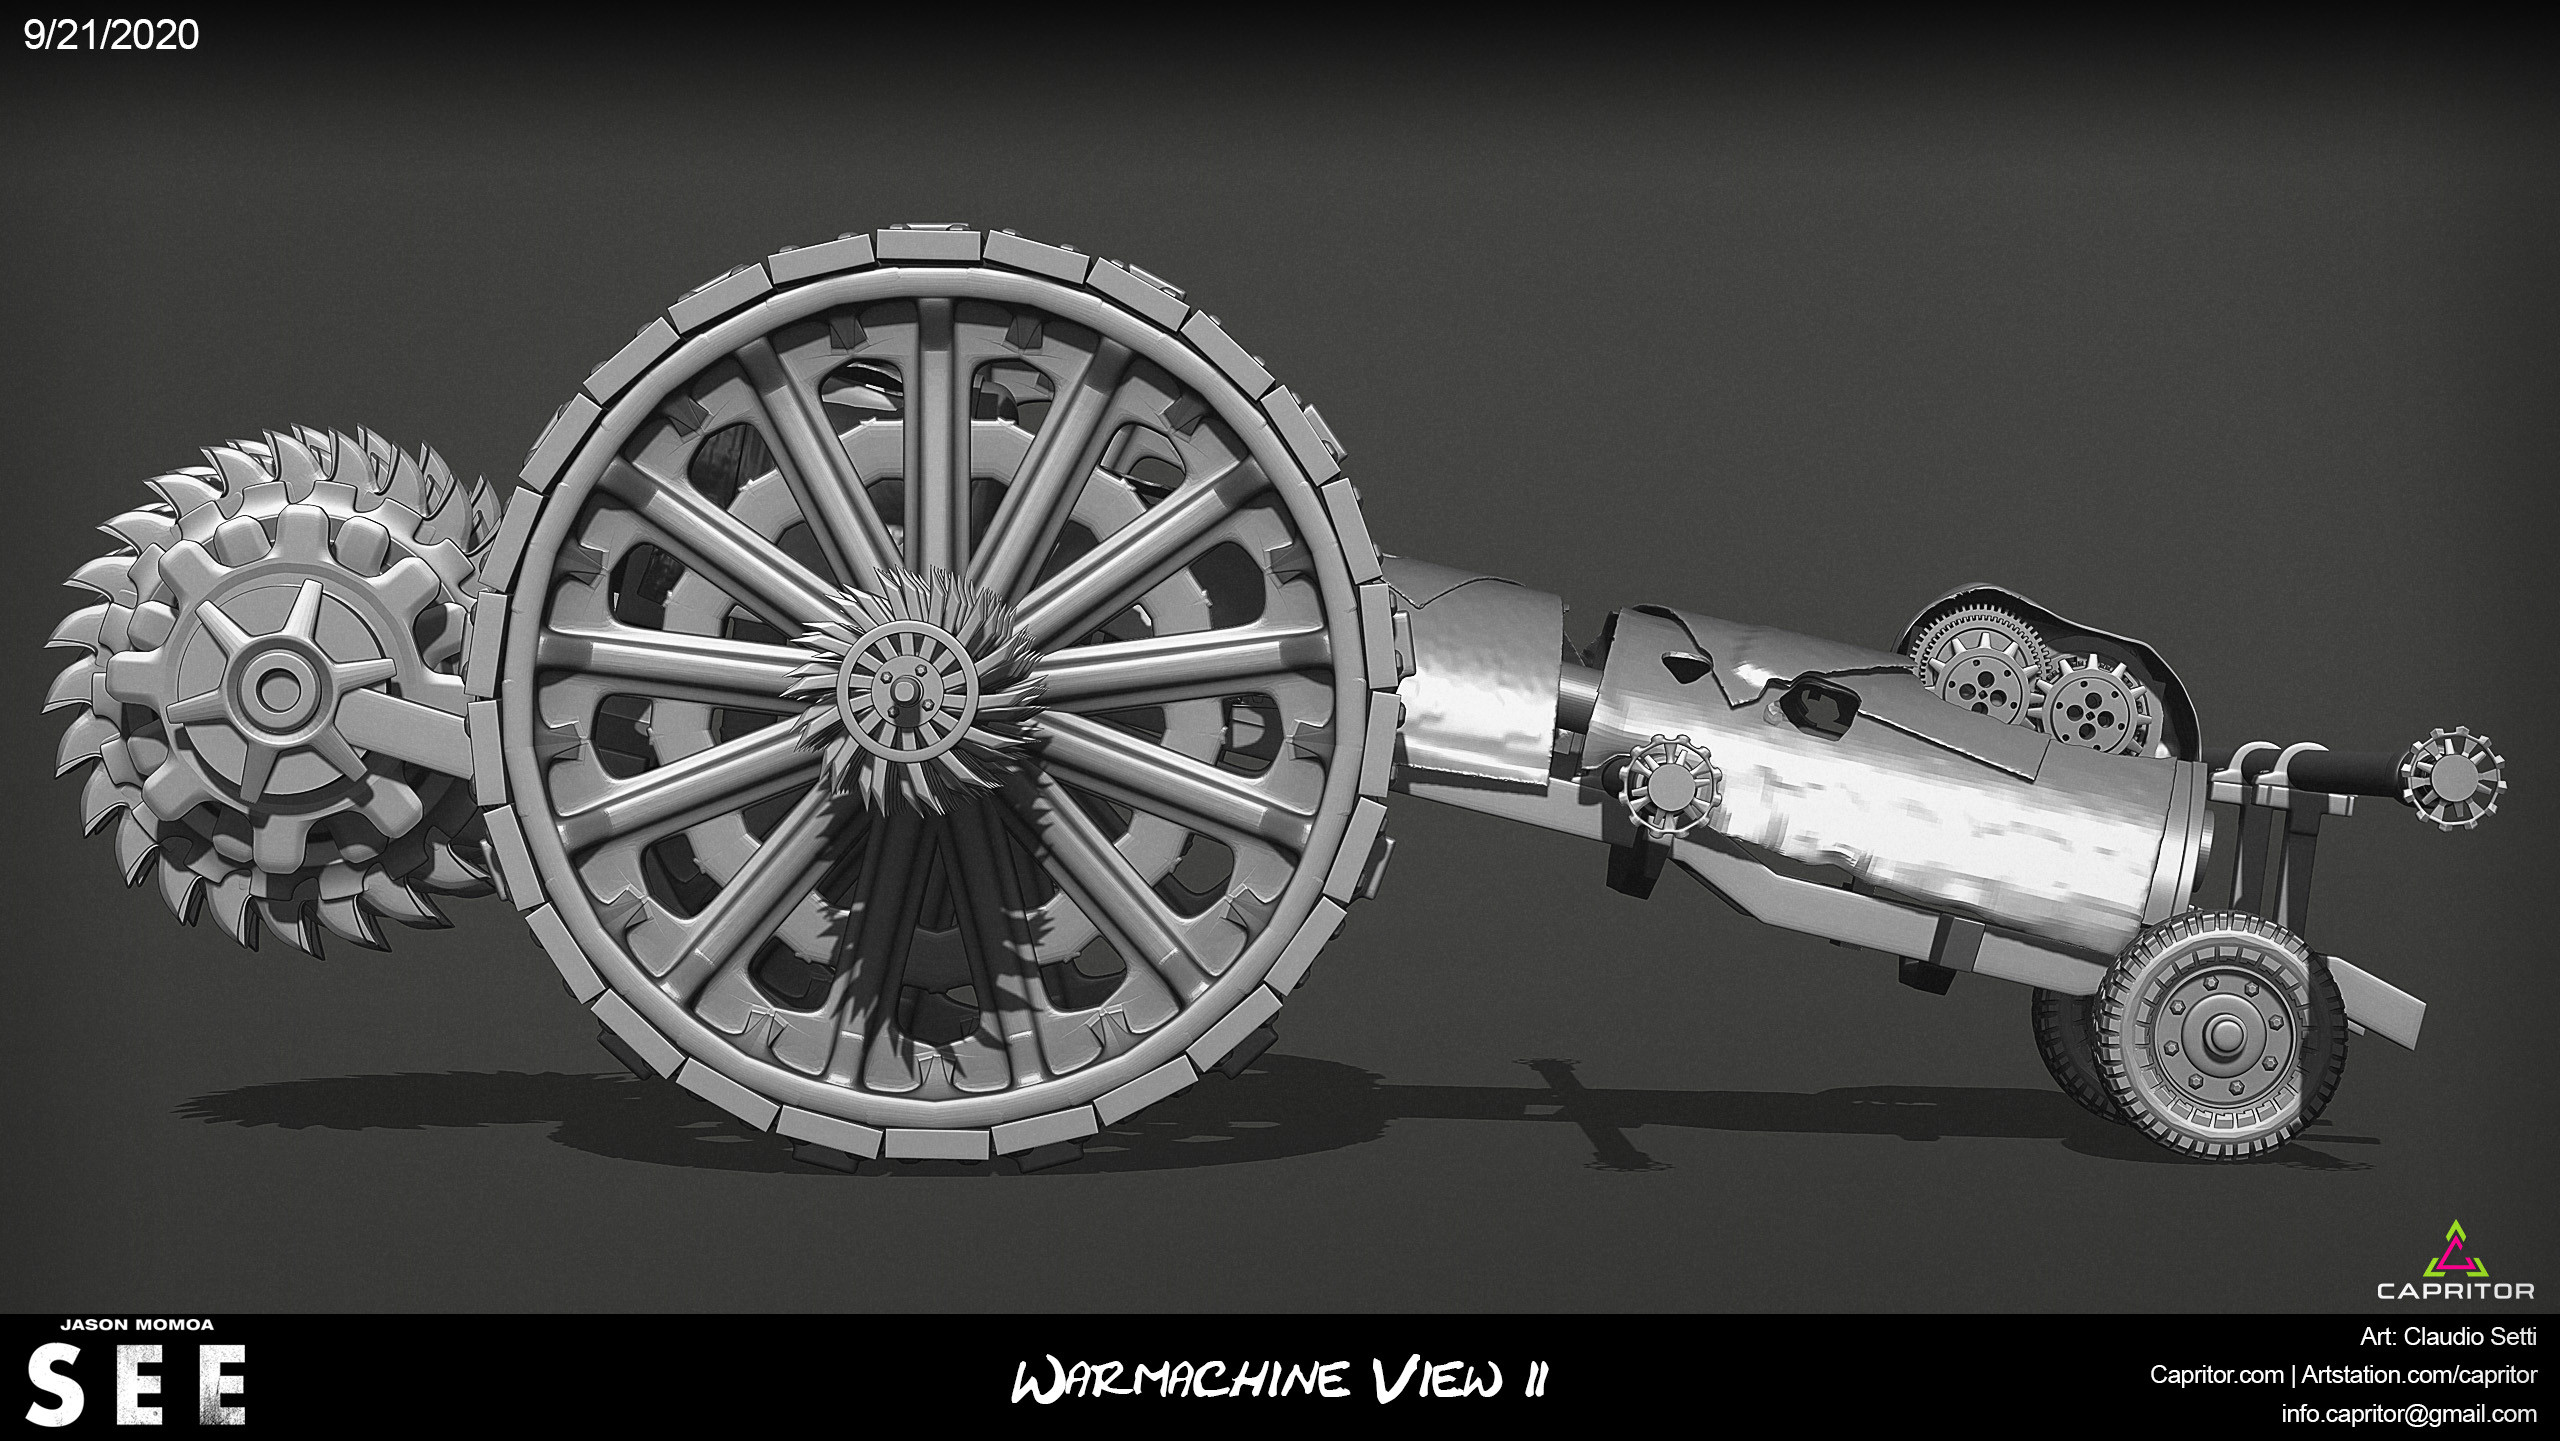 Jason Momoa - SEE - Warmachine Concept Design  View 2